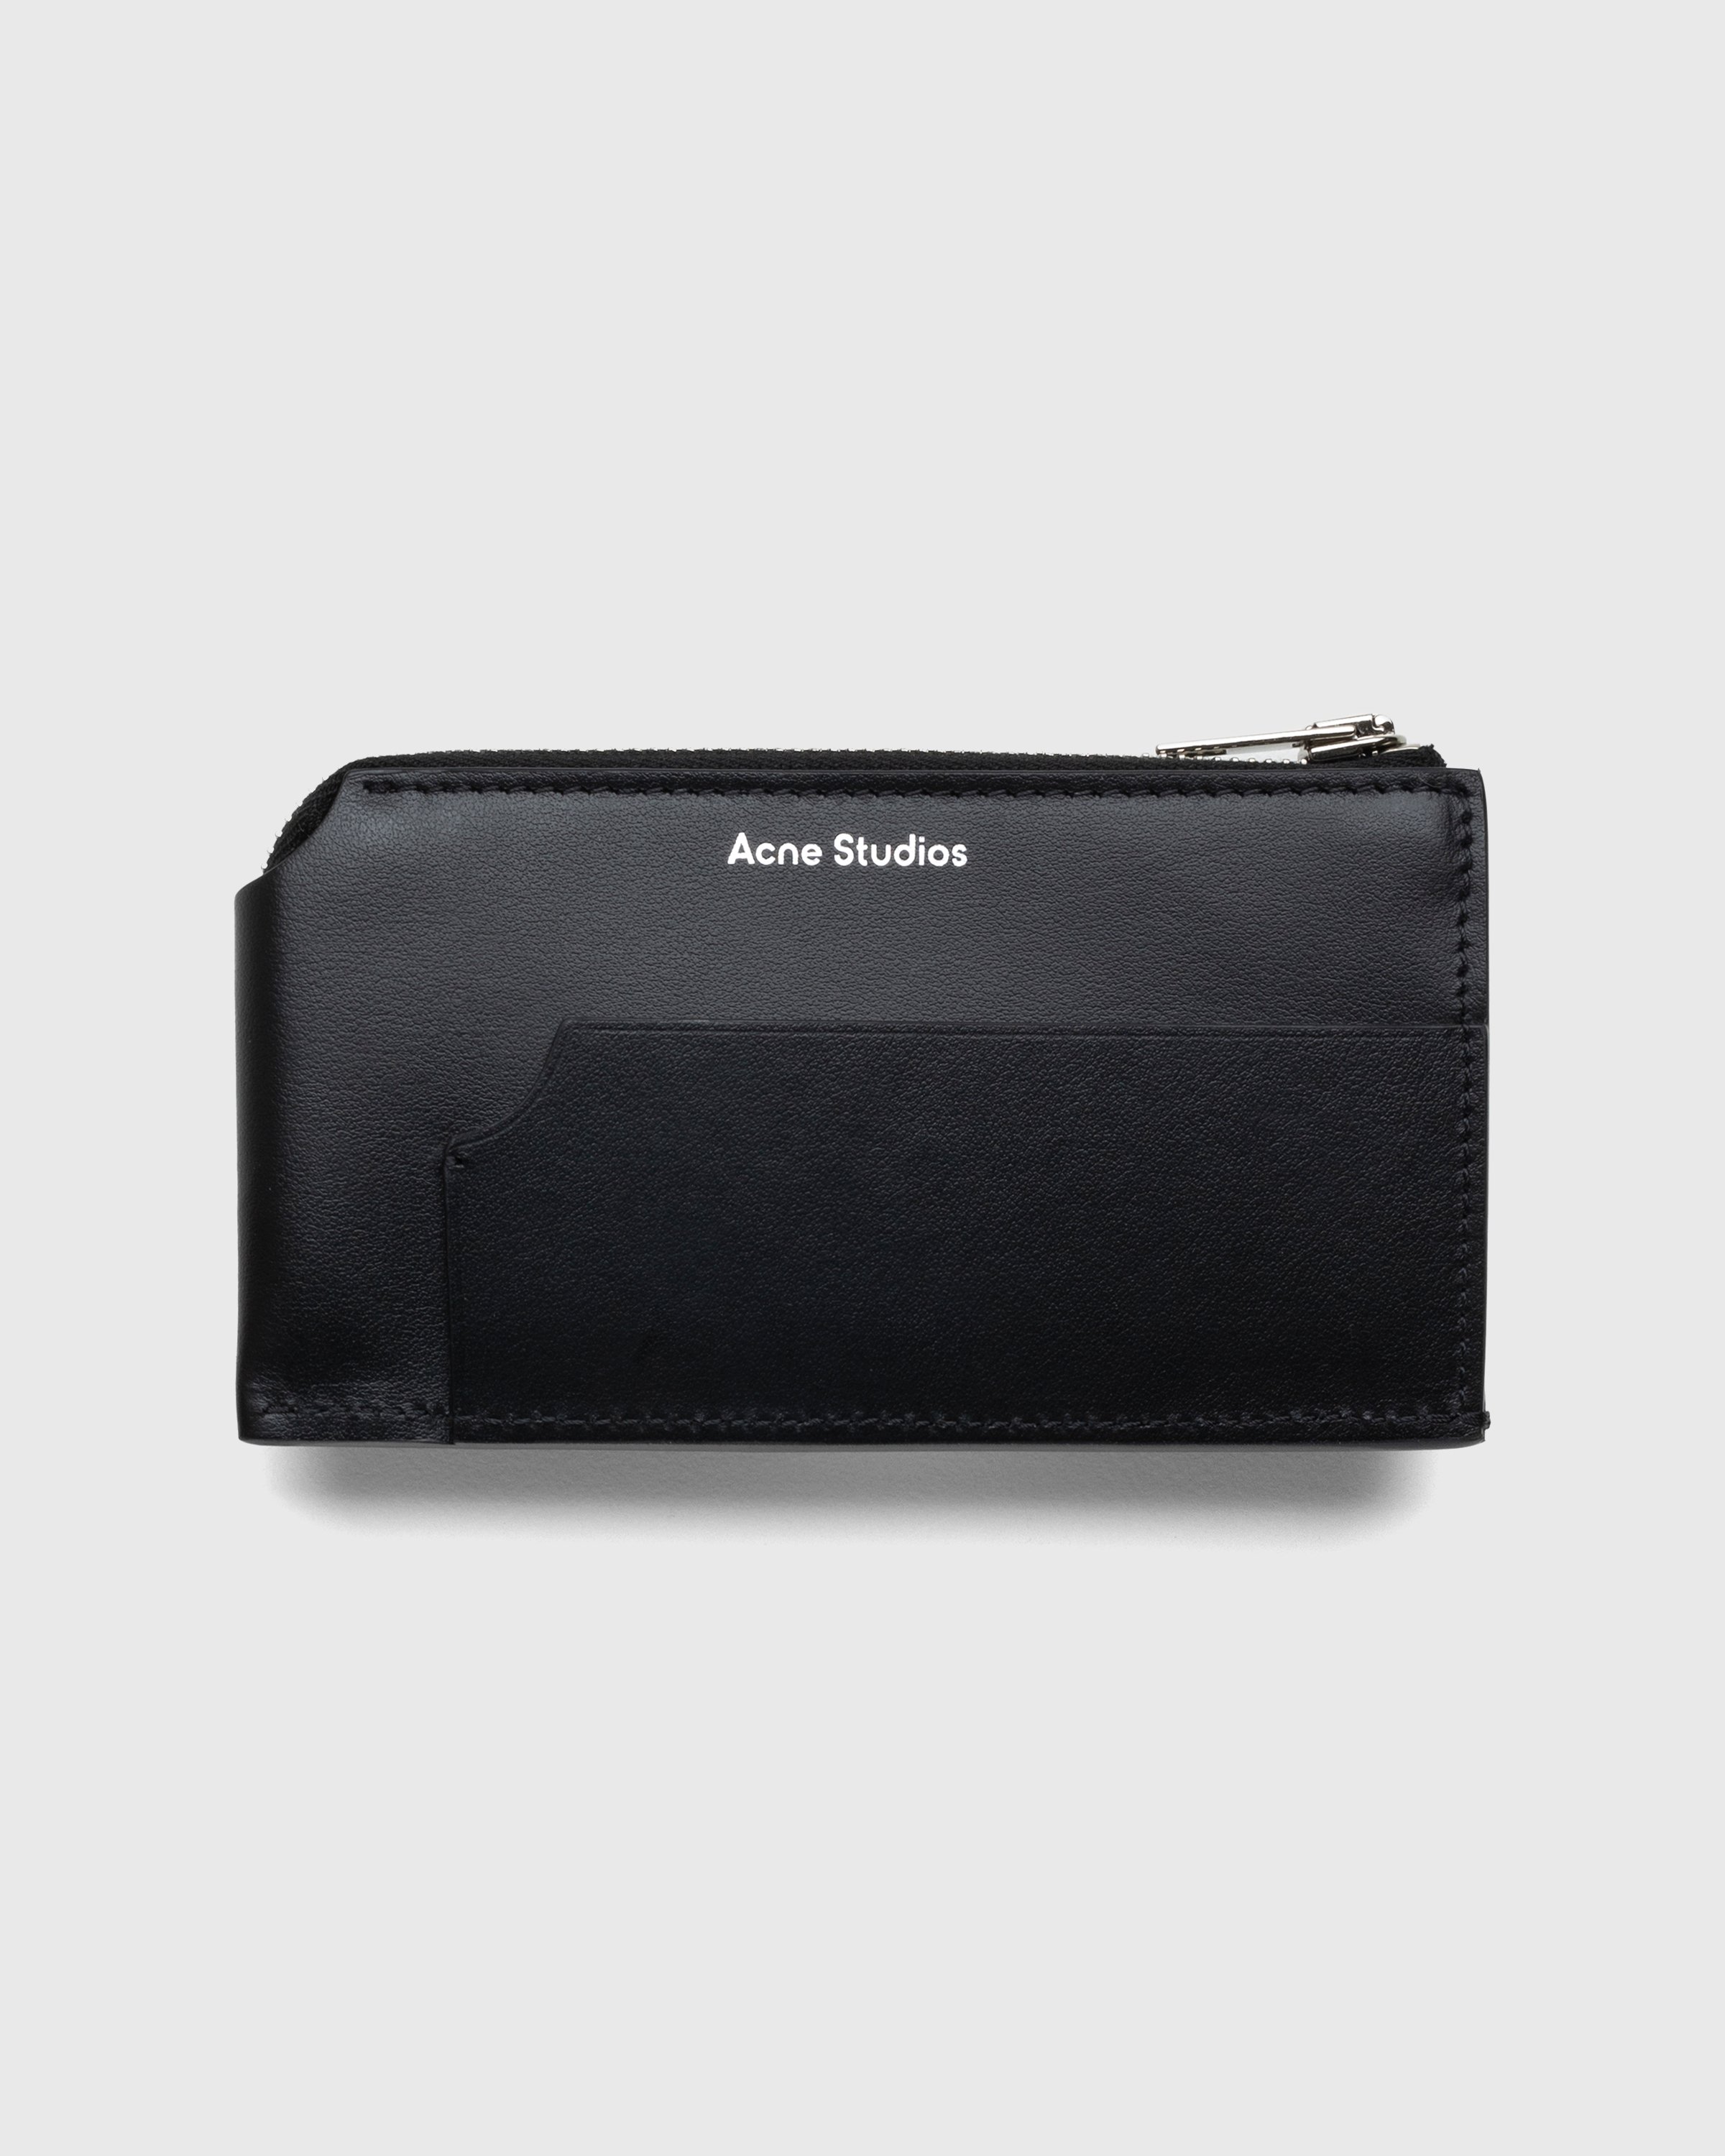 Acne Studios - Leather Zip Wallet Black - Accessories - Black - Image 1